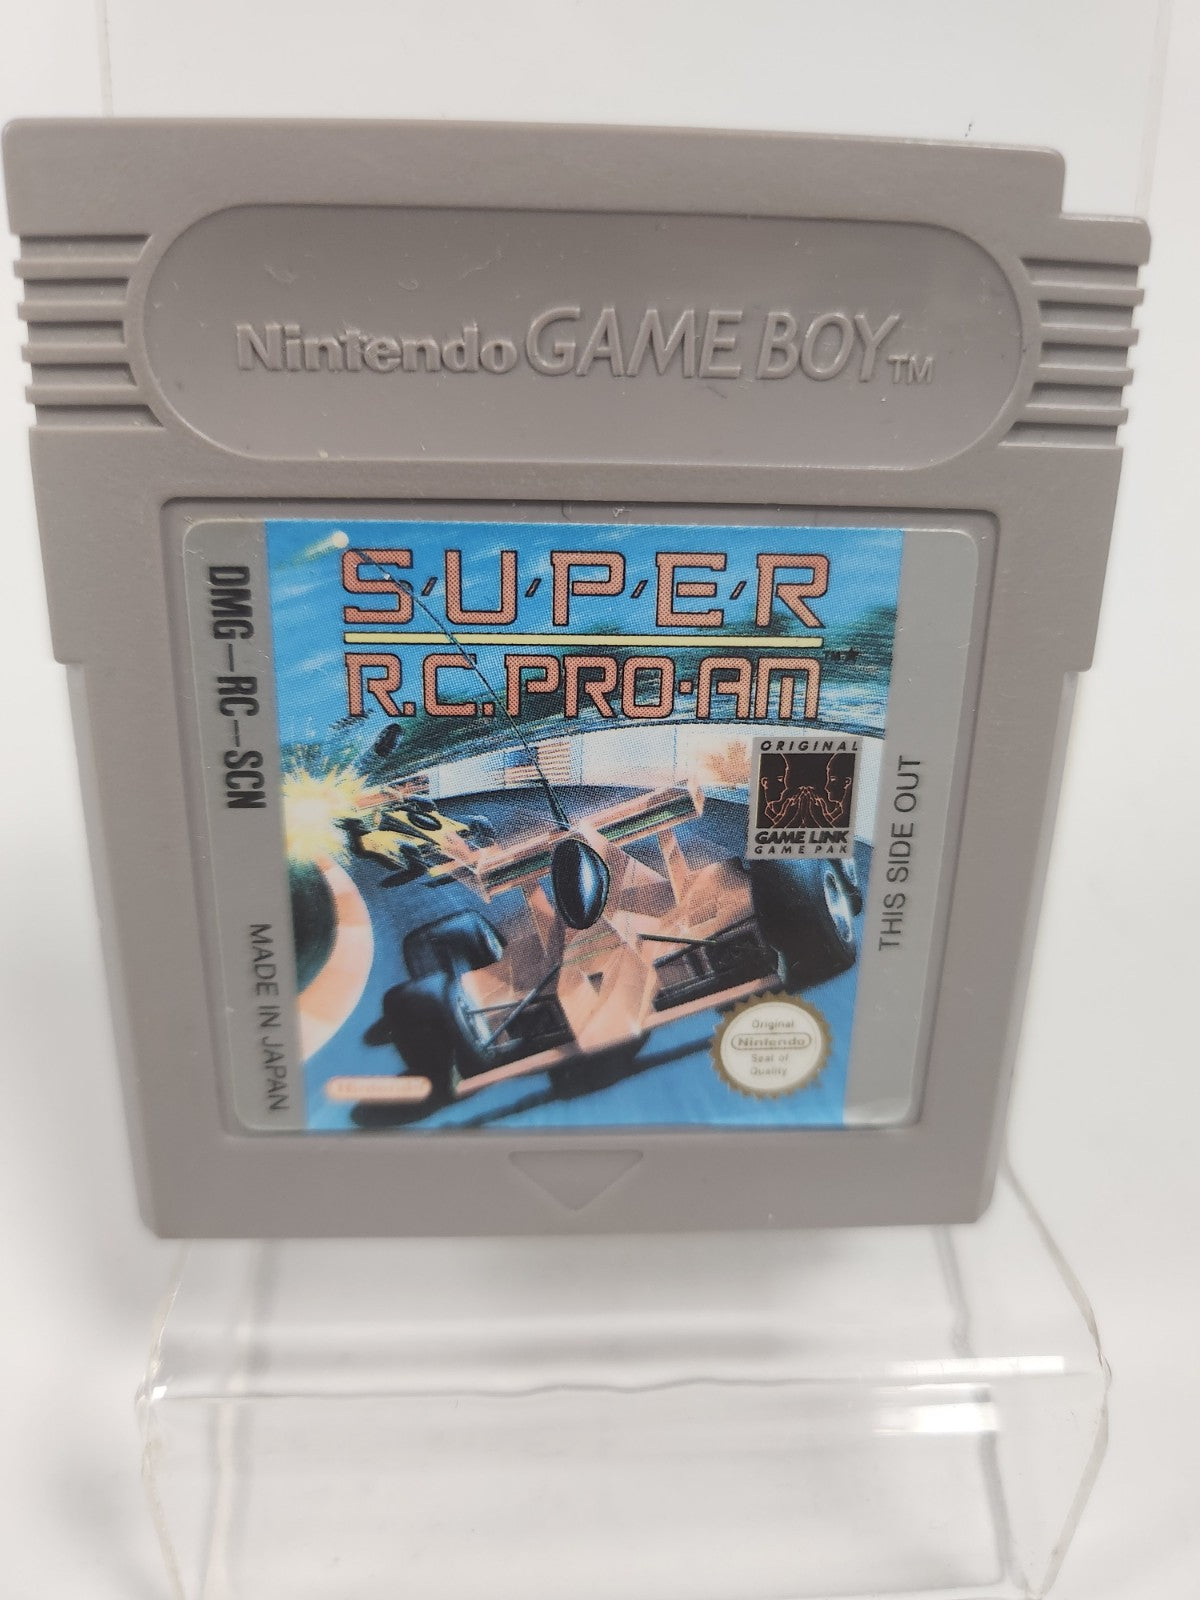 Super RC Pro Am Nintendo Game Boy